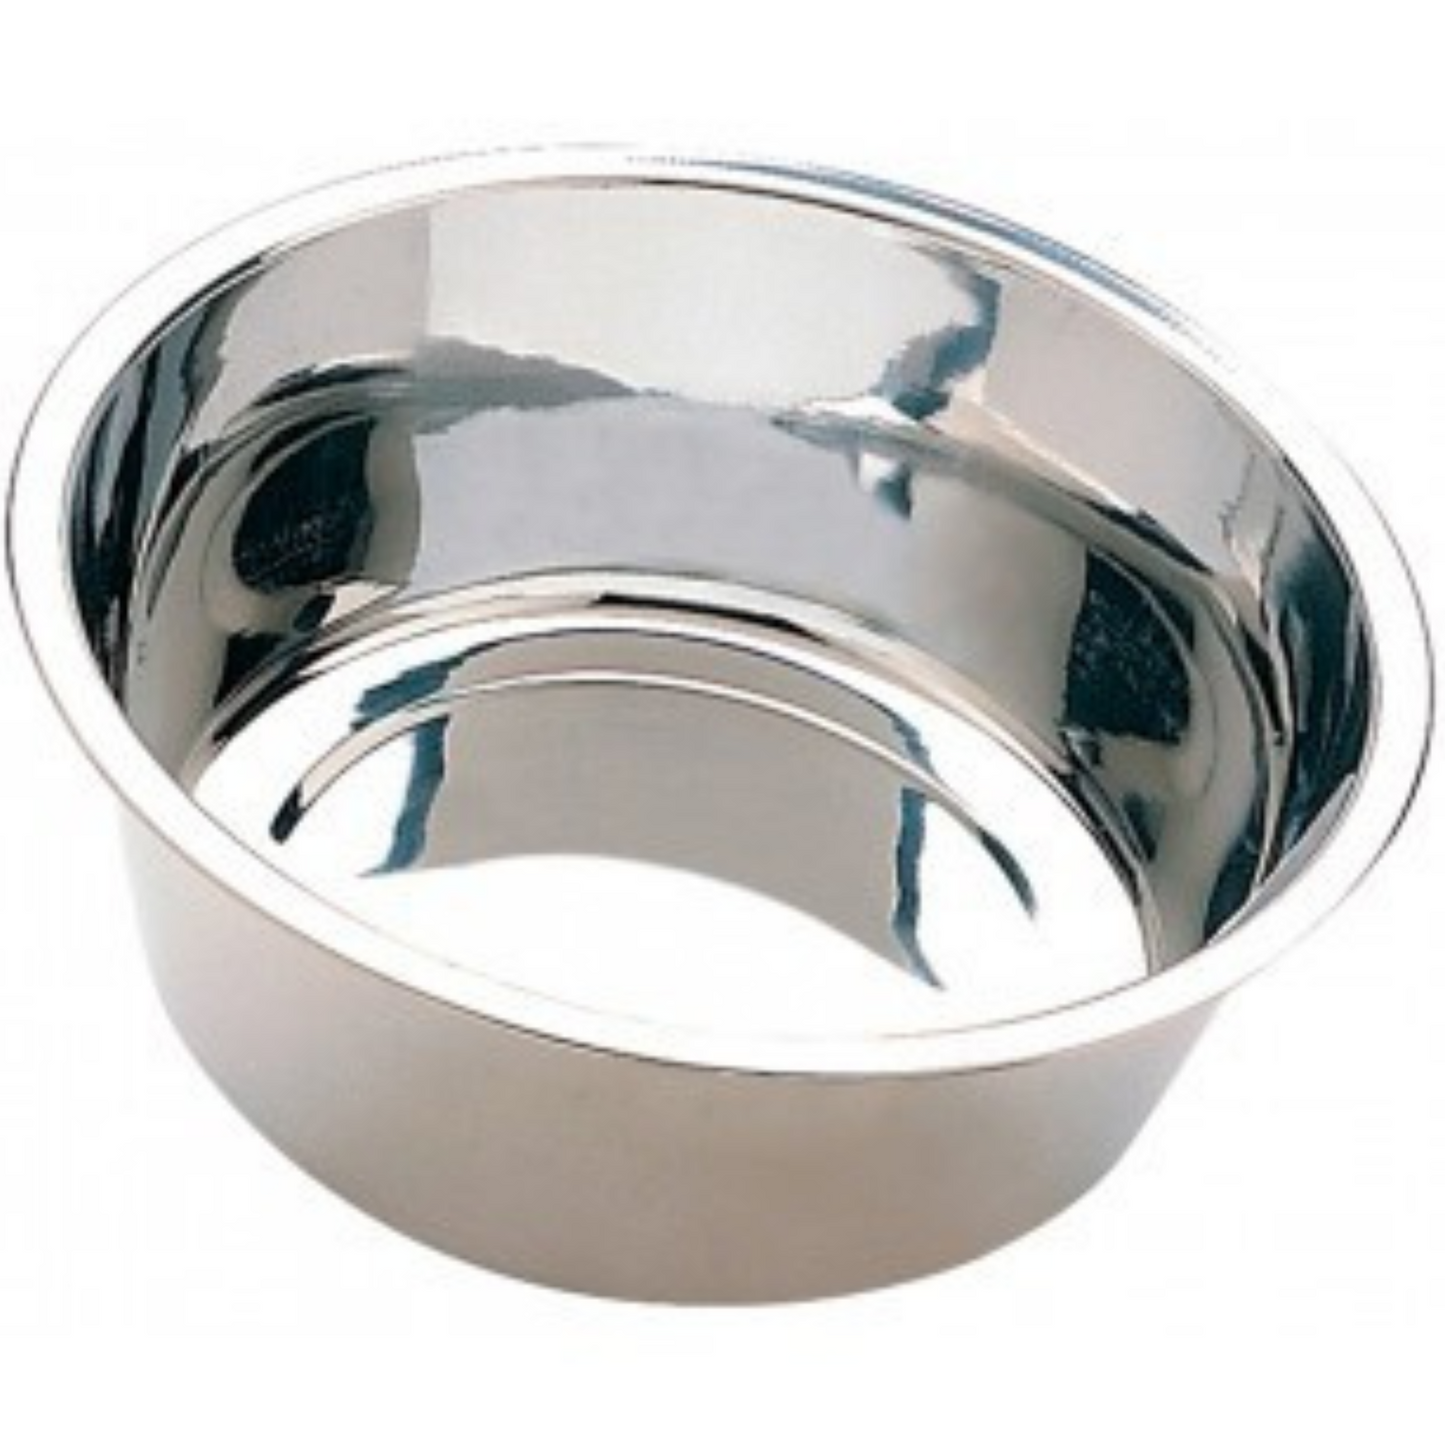 Spot Stainless Steel Pet Bowl - 3 Quart - DS